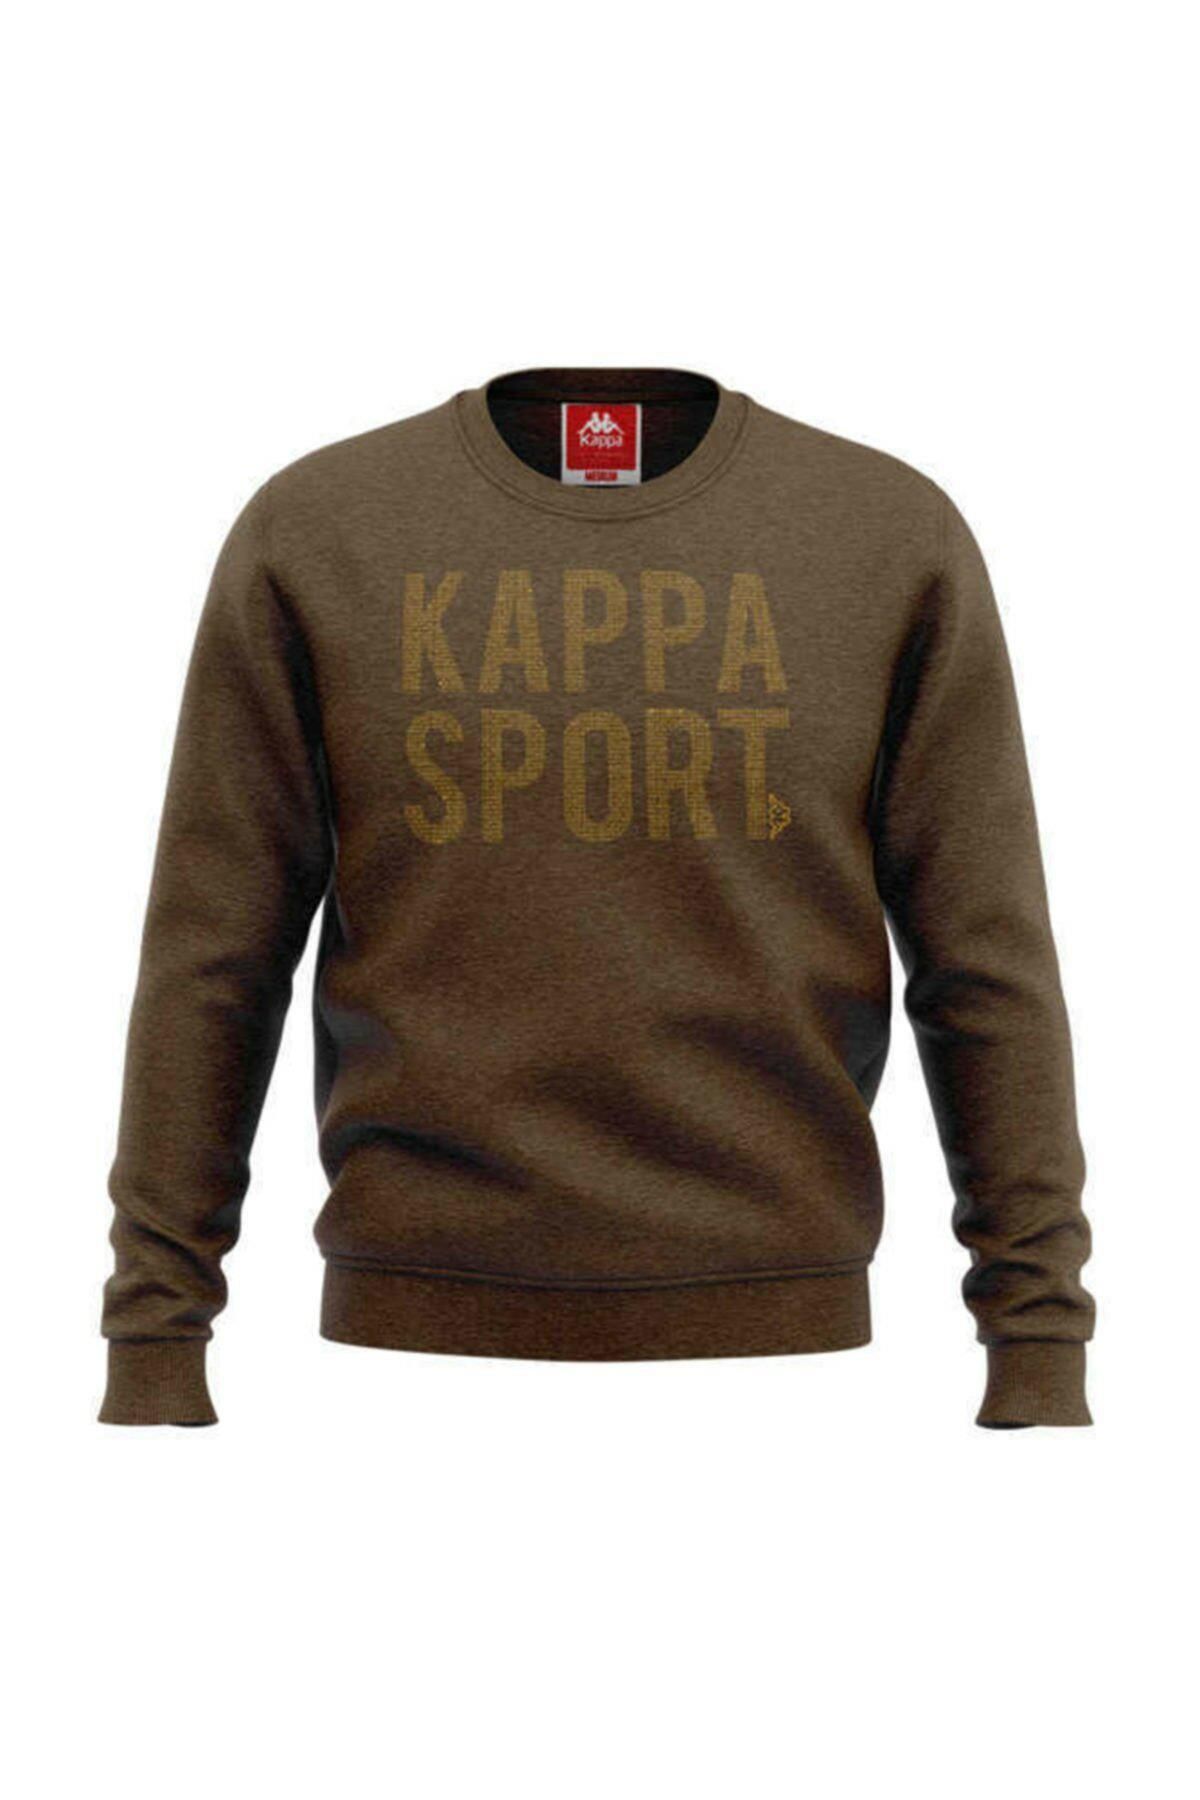 Kappa Erkek Sweatshirt Bak 1 304s6l0